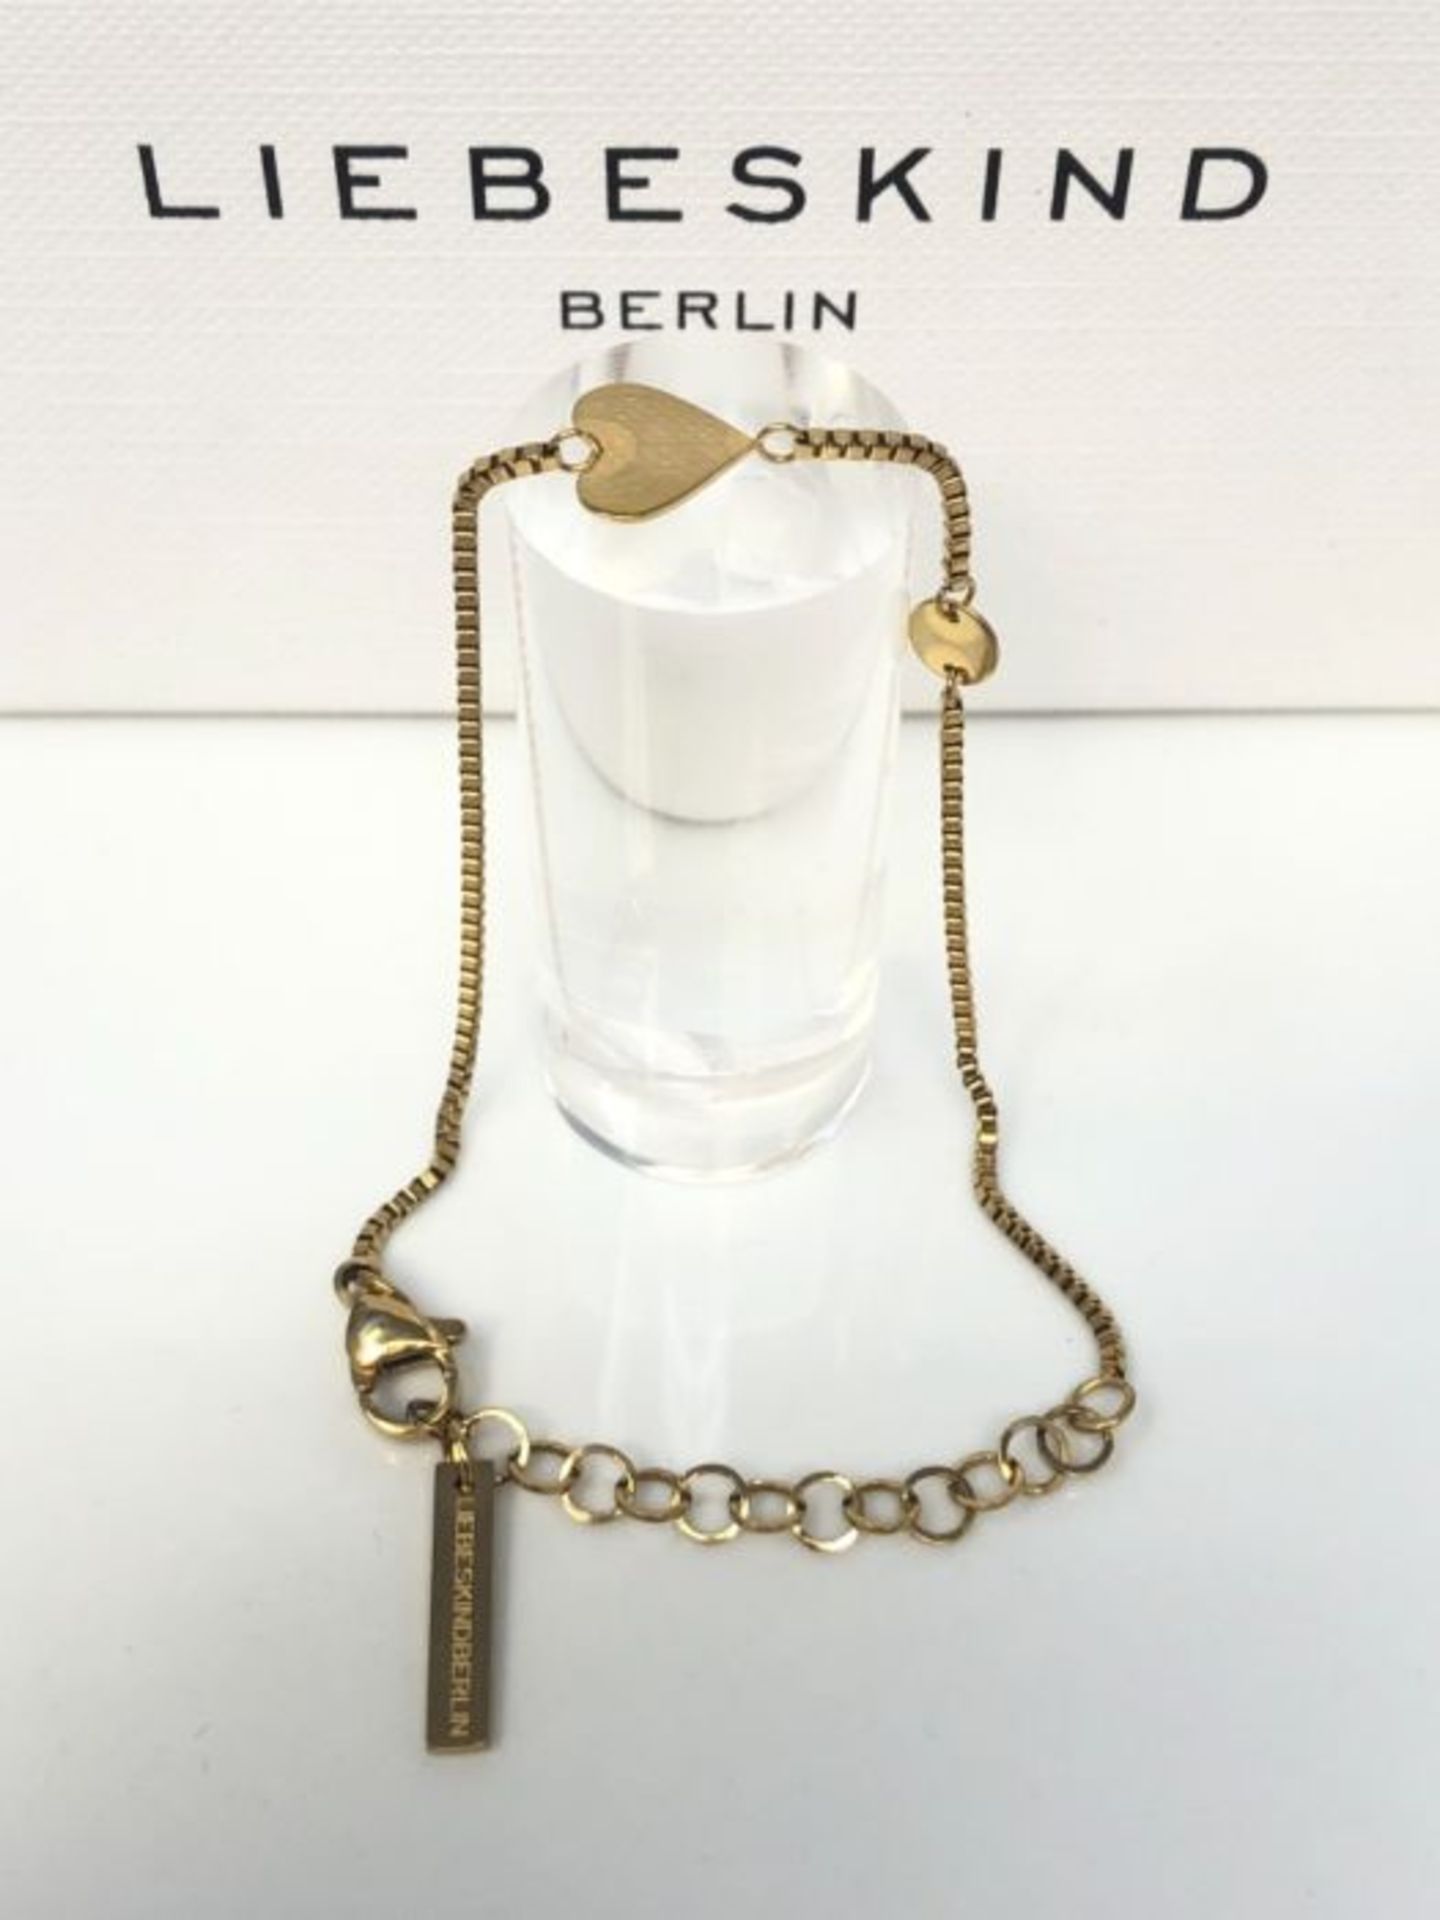 Liebeskind Berlin Bracelet, 20 centimeters, Stainless Steel, 0, - Image 2 of 3